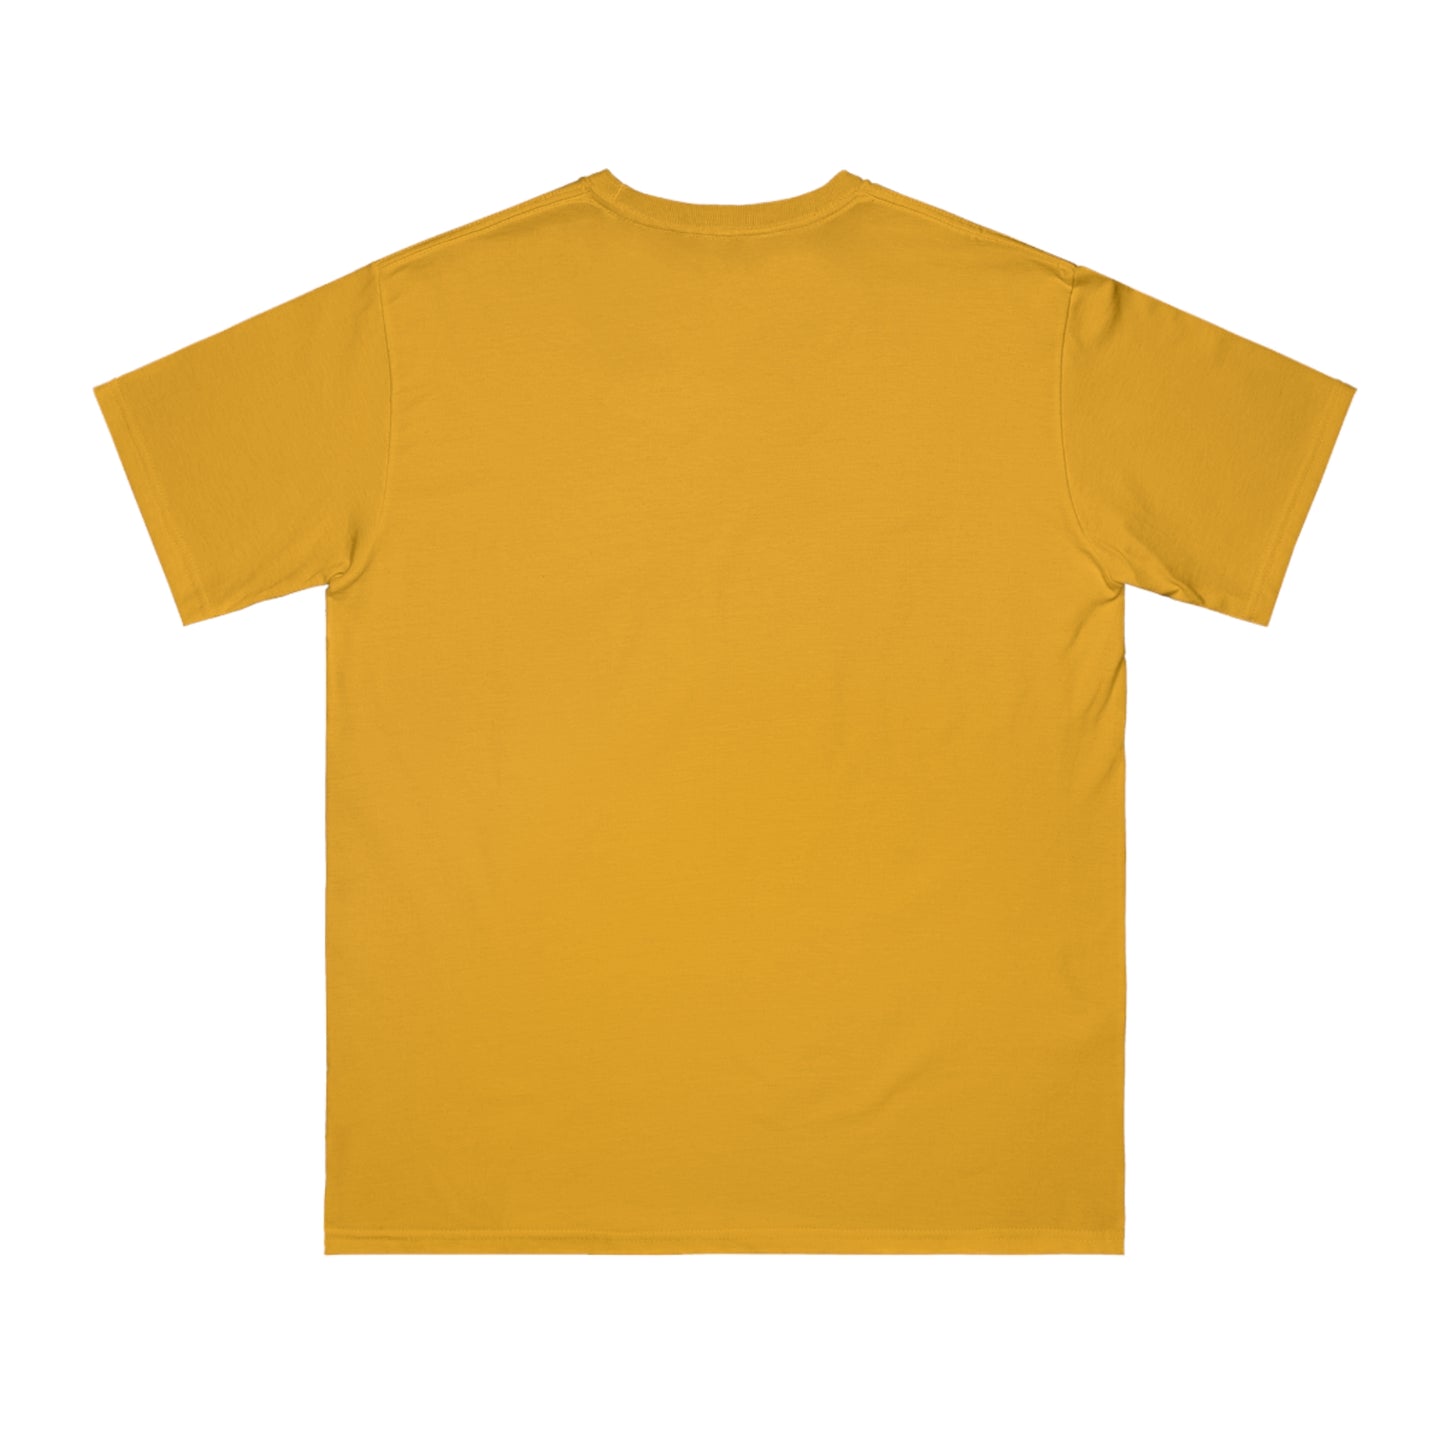 Detroit '313' T-Shirt (Athletic Font) | Organic Unisex